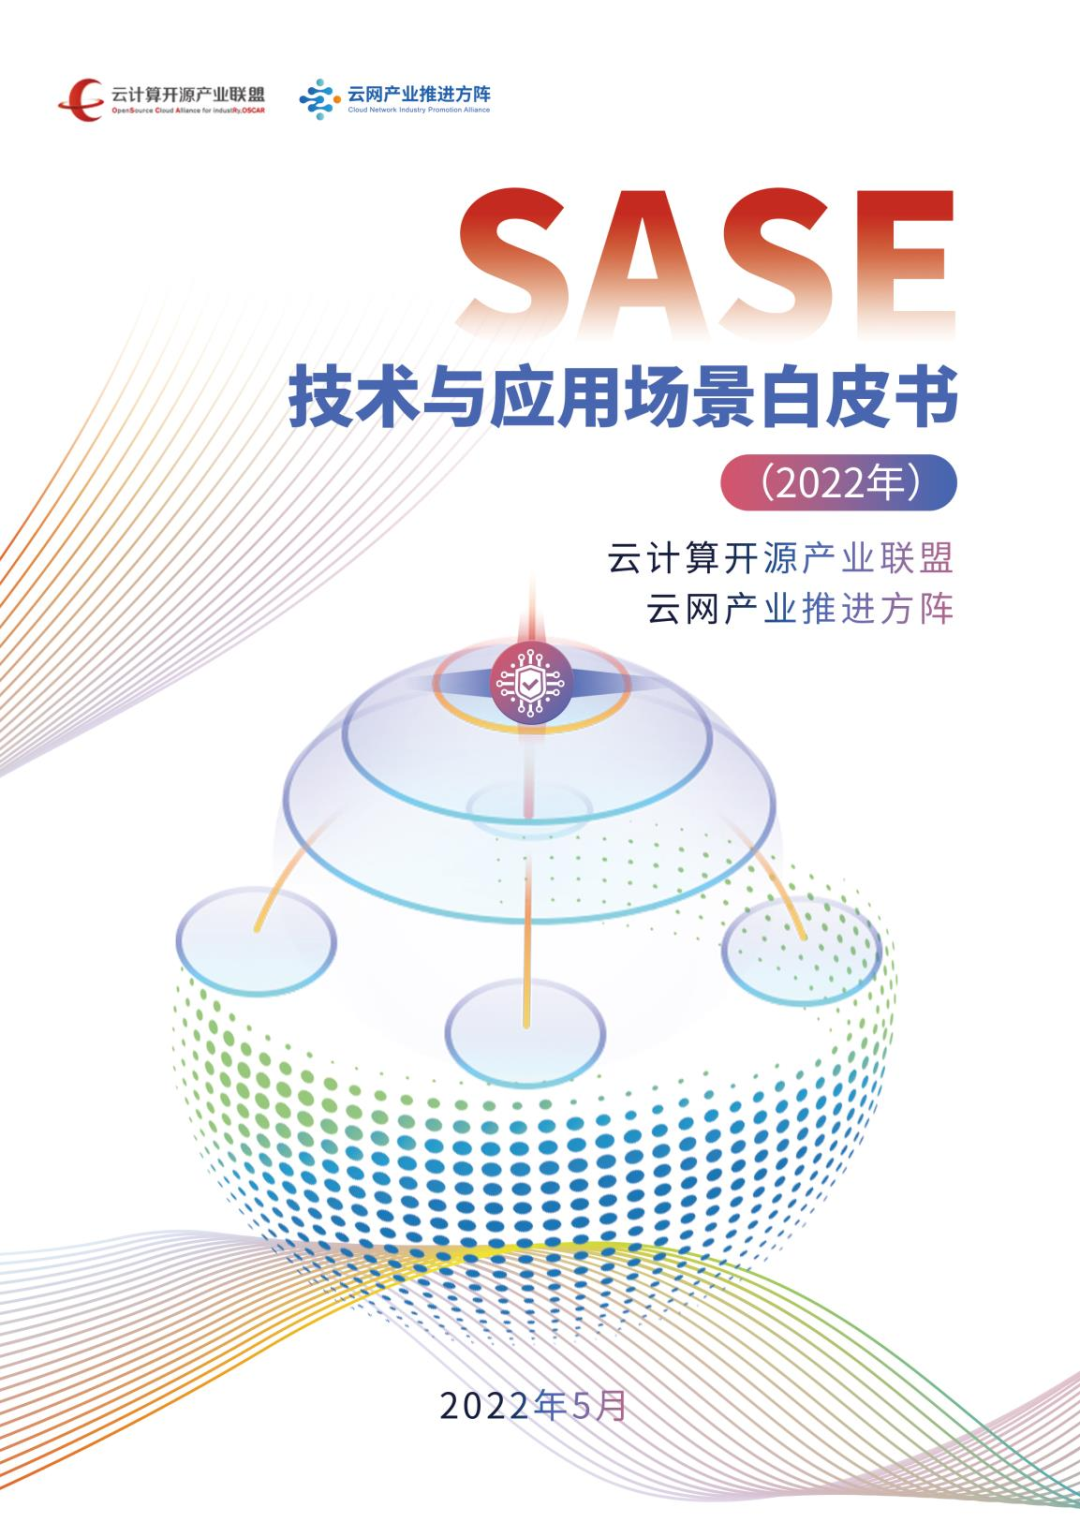 《SASE技术与应用场景白皮书》发布 -第1张图片-网盾网络安全培训